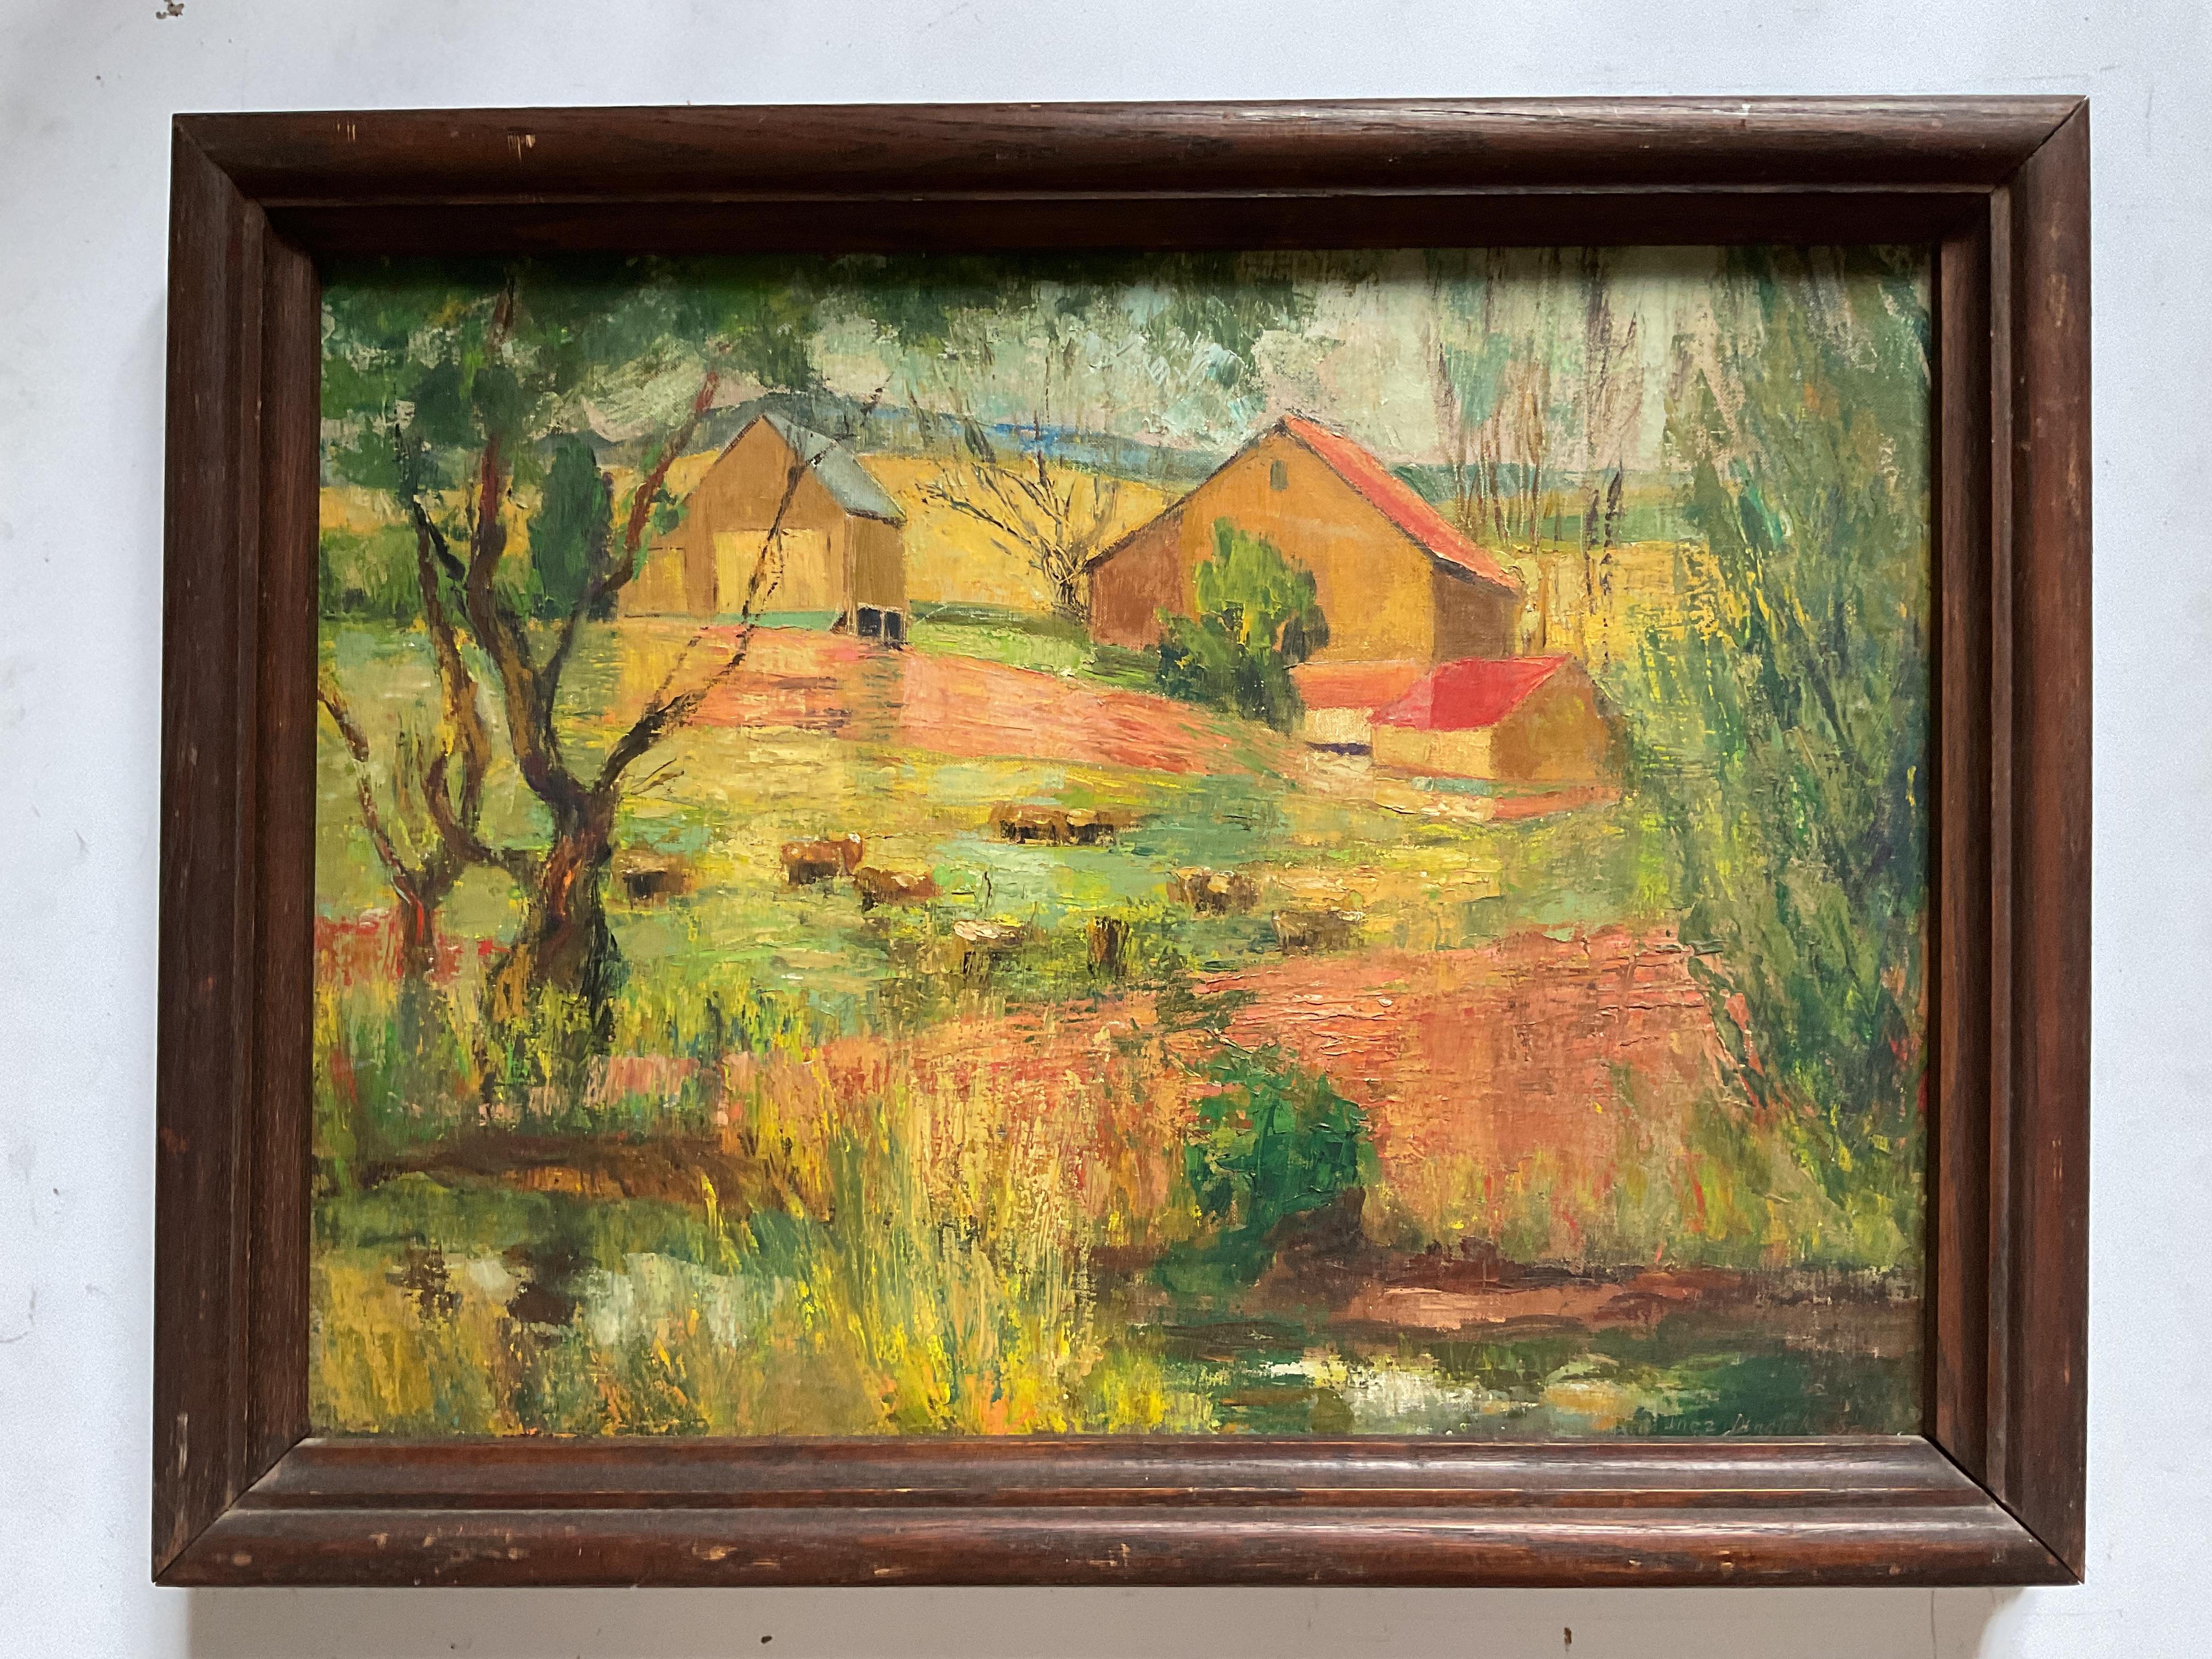 Landscape Painting Inez Dunnick Smith - Vintage American Pennsylvania Farm Landscape ; Signed Oil on Canvas, ca 1940's